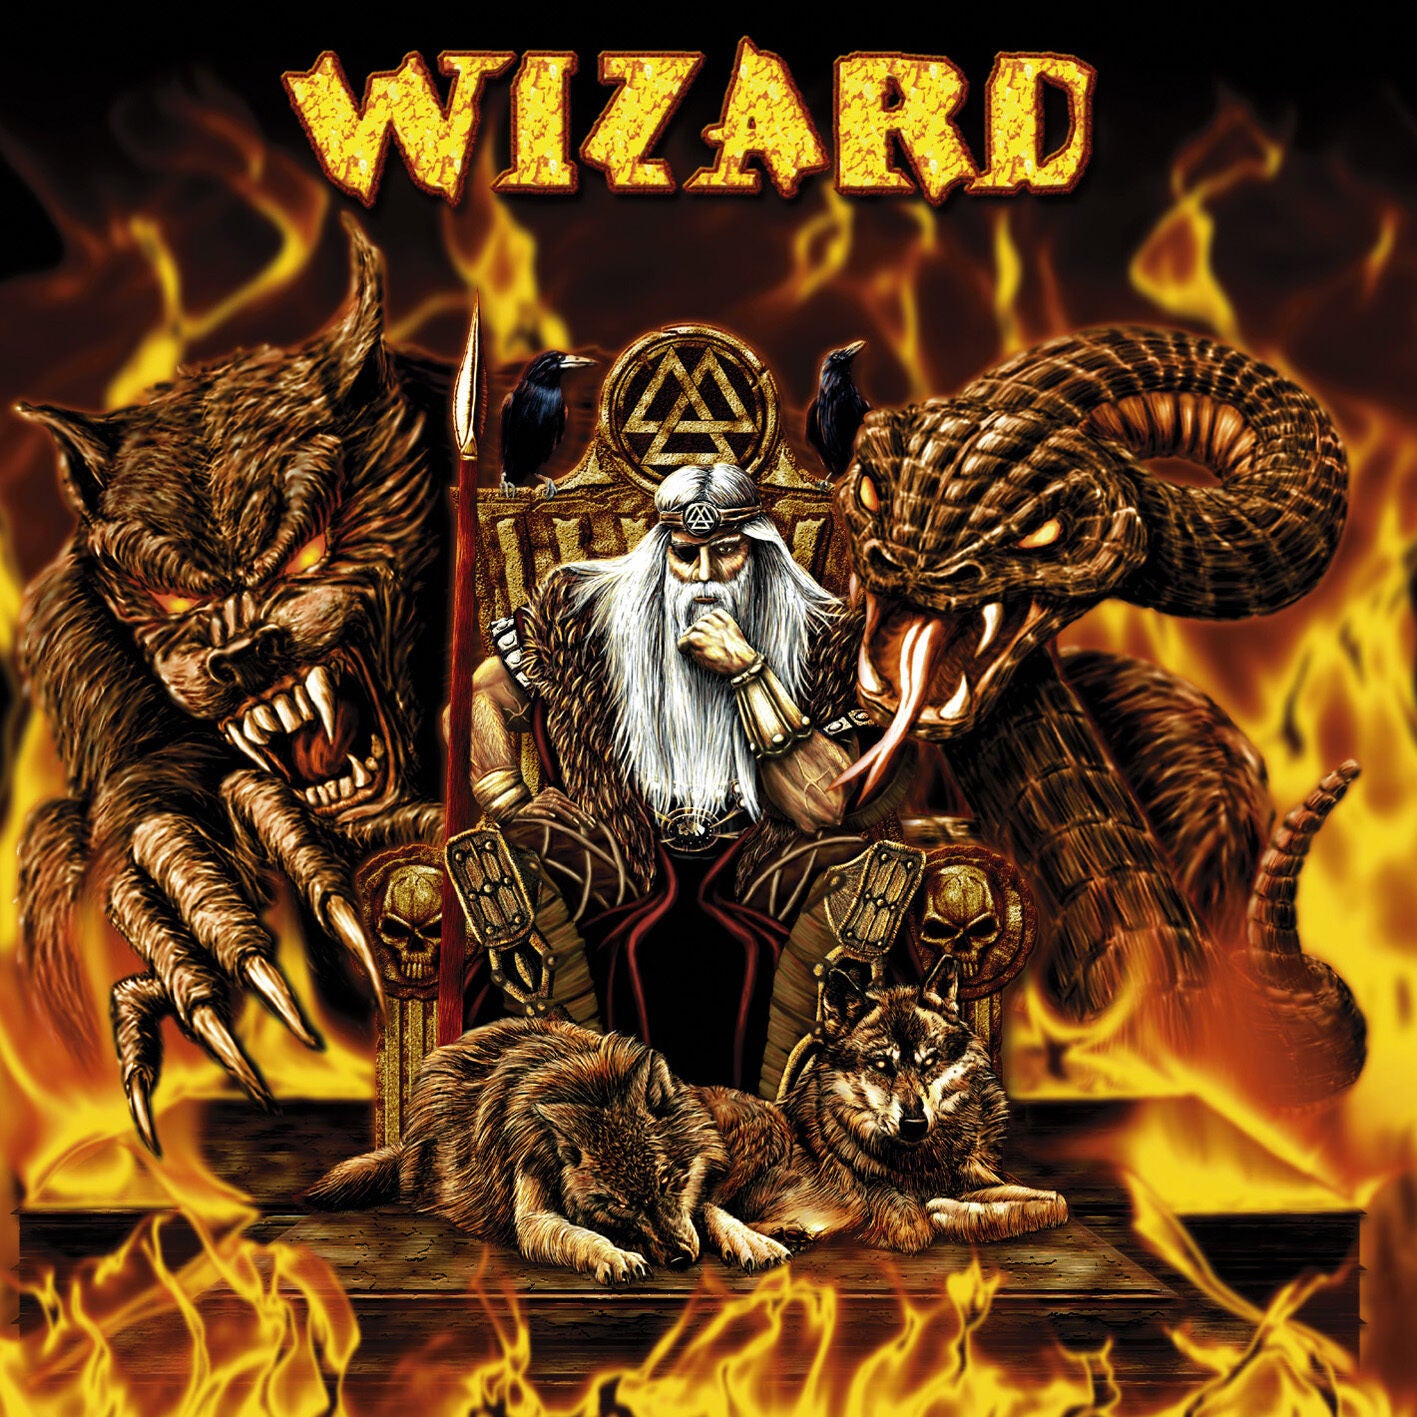 WIZARD - Odin Ltd. Digipak CD + Bonus Tracks + Poster + Sticker True Heavy Metal